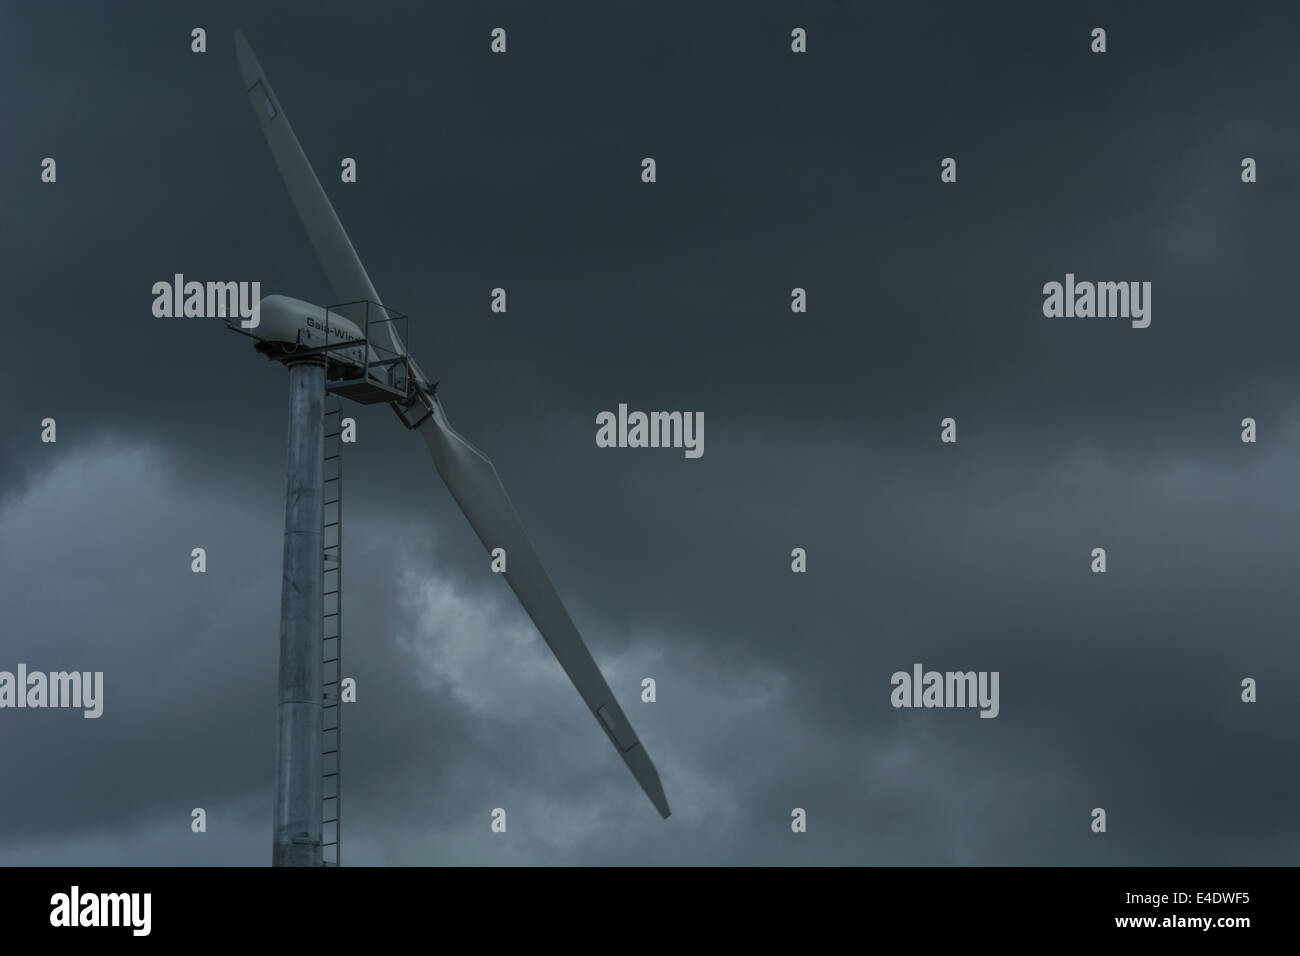 Wind turbine / wind generator set against brooding / foreboding dark clouds. Stock Photo